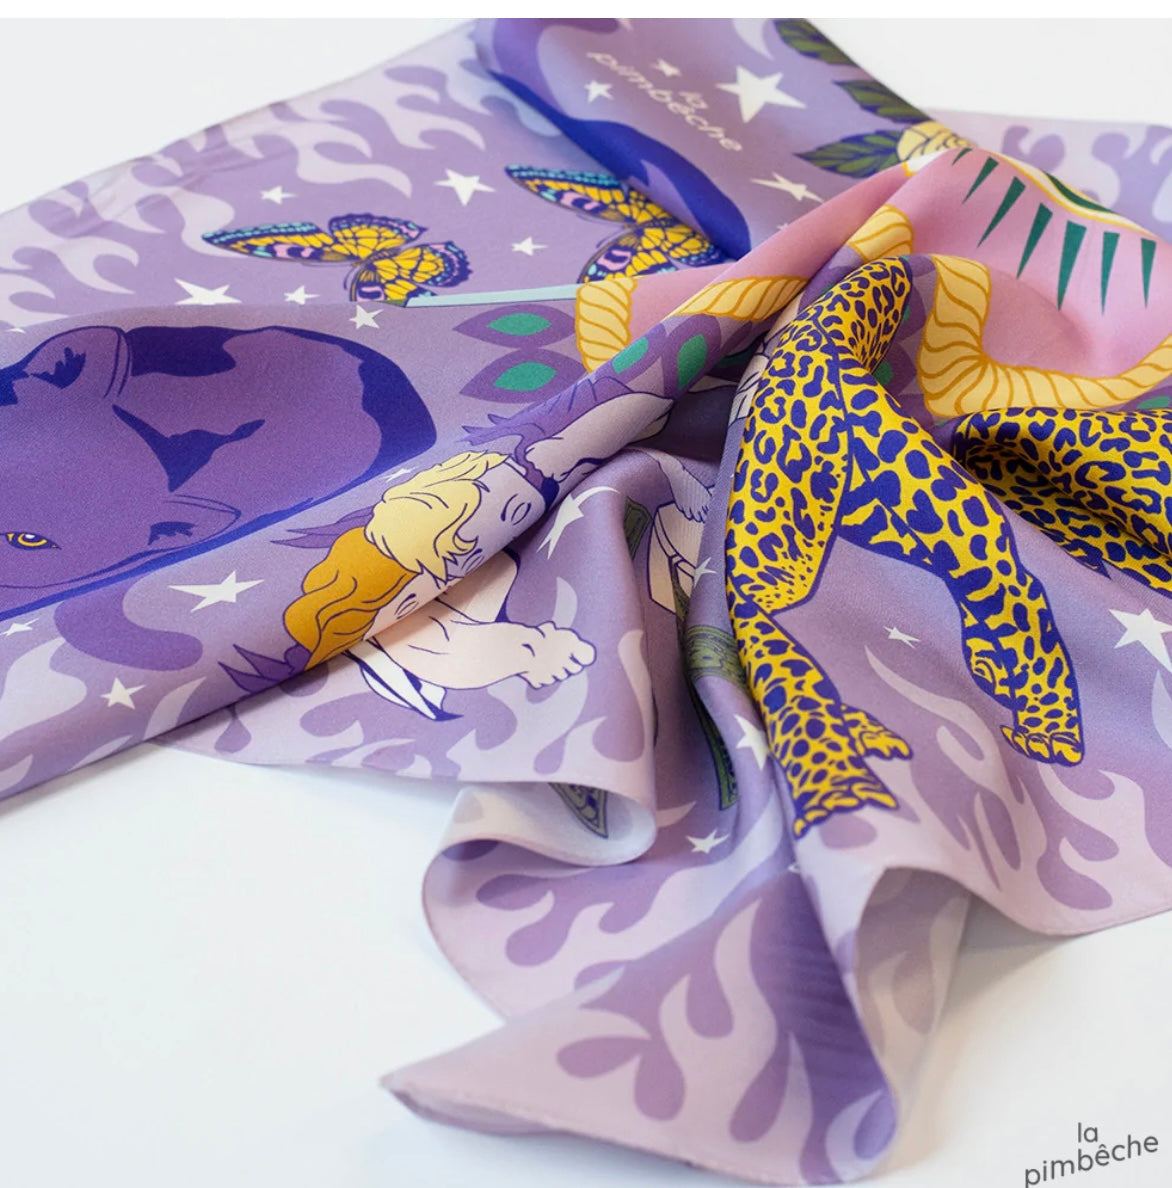 La Pimbêche - purple fire silk scarves